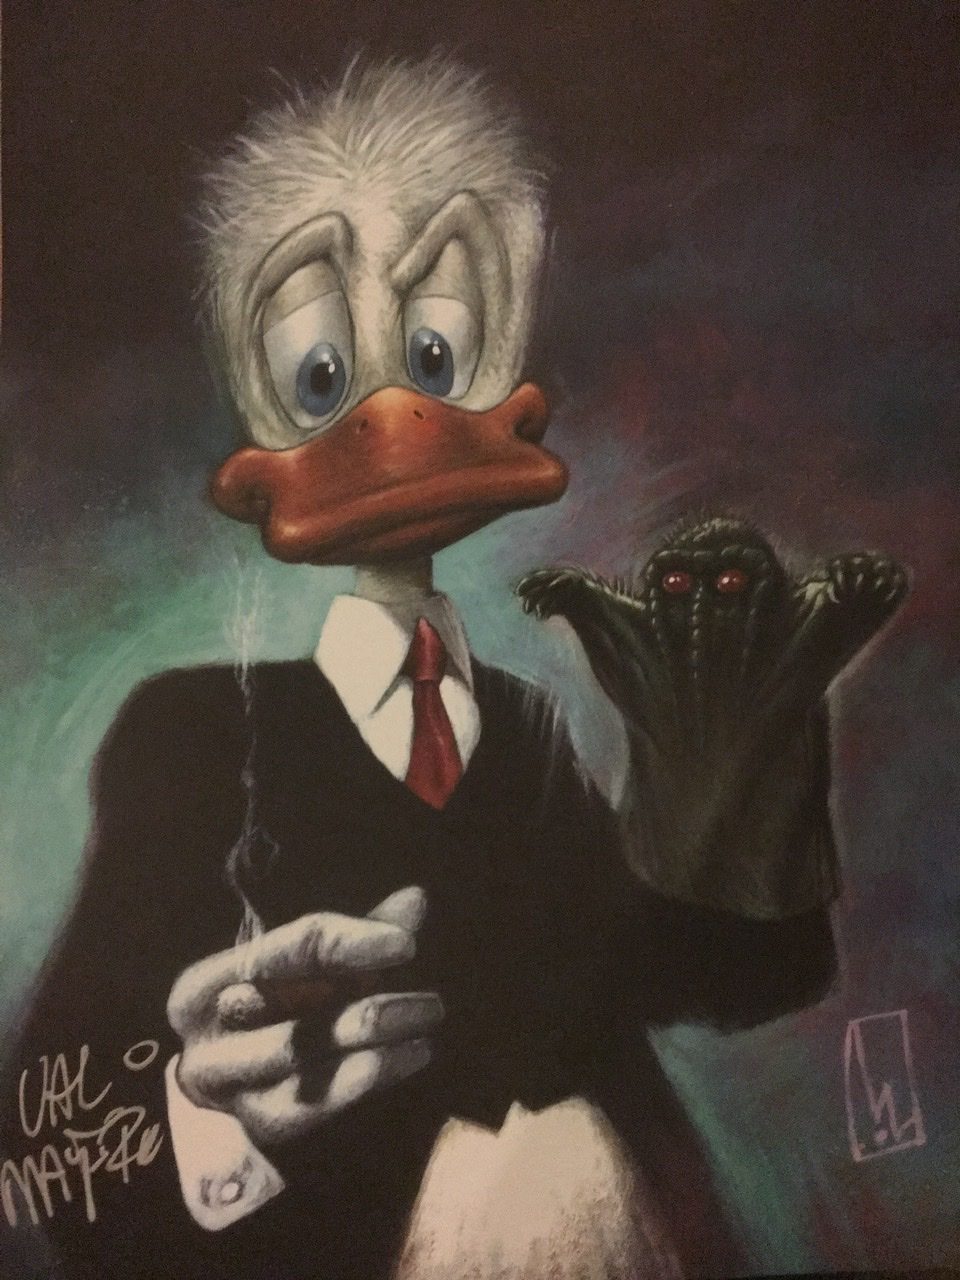 Howard the Duck by Val Mayerik